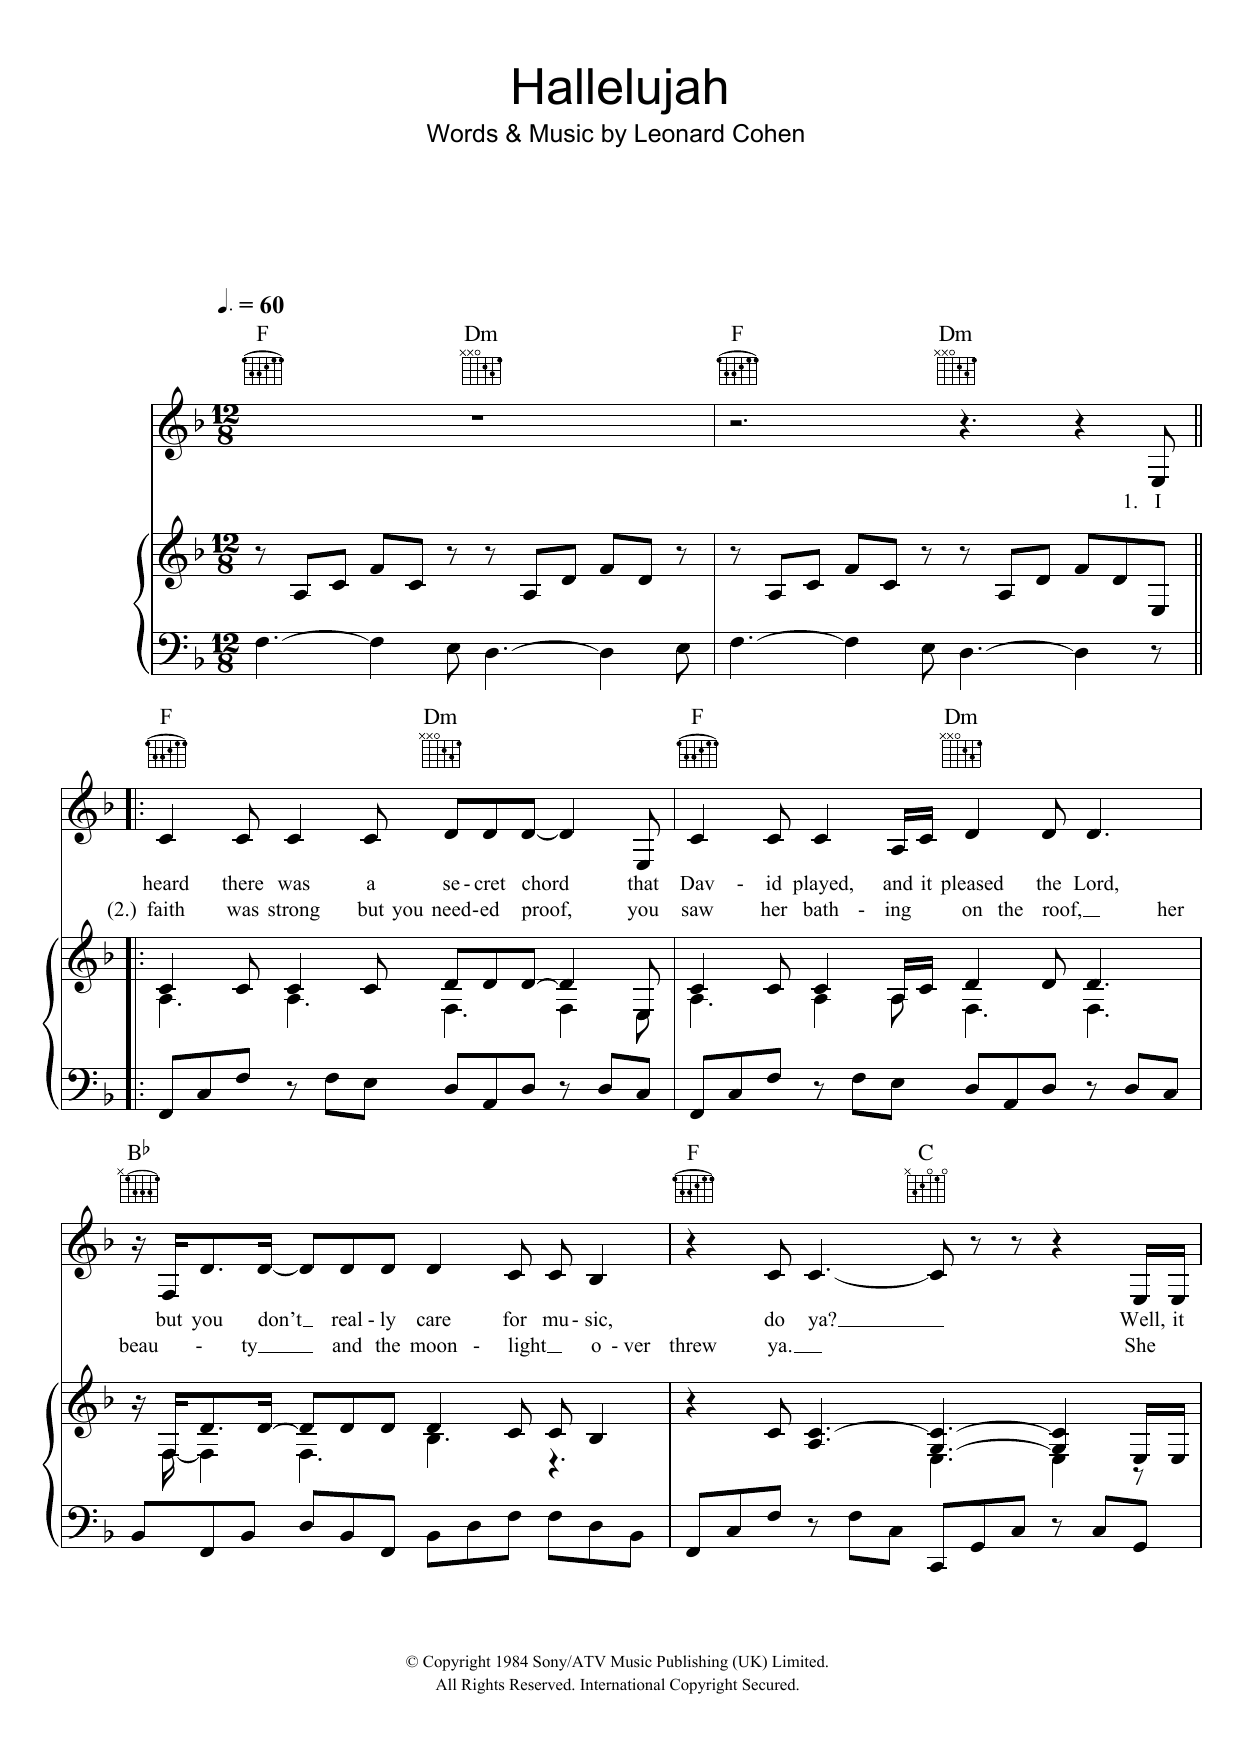 Alexandra Burke Hallelujah Sheet Music Notes & Chords for Alto Saxophone - Download or Print PDF